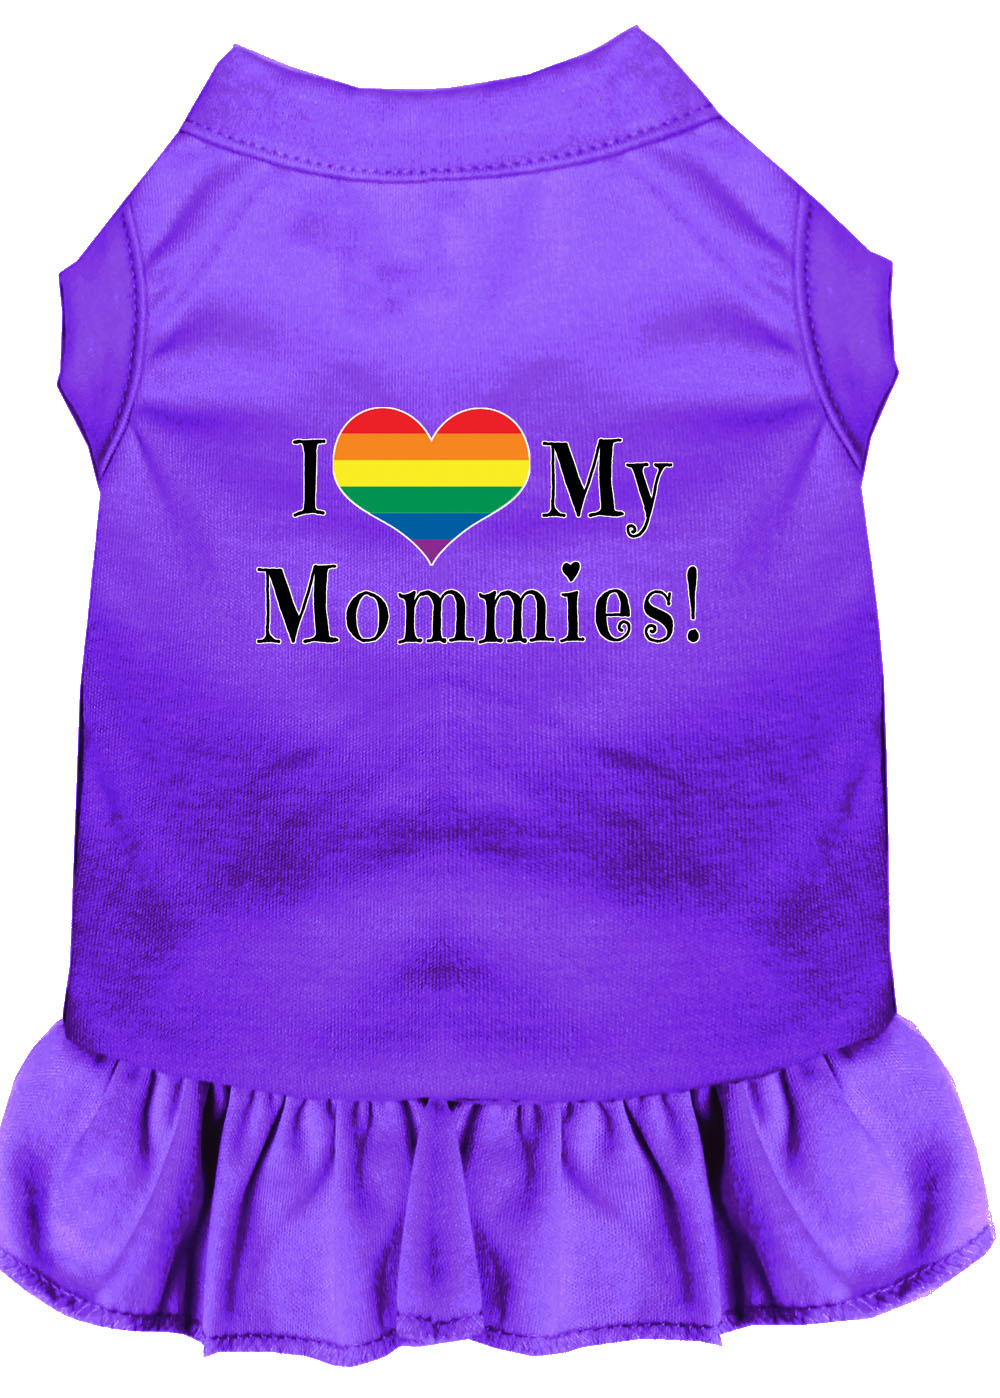 I Heart my Mommies Screen Print Dog Dress Purple Lg